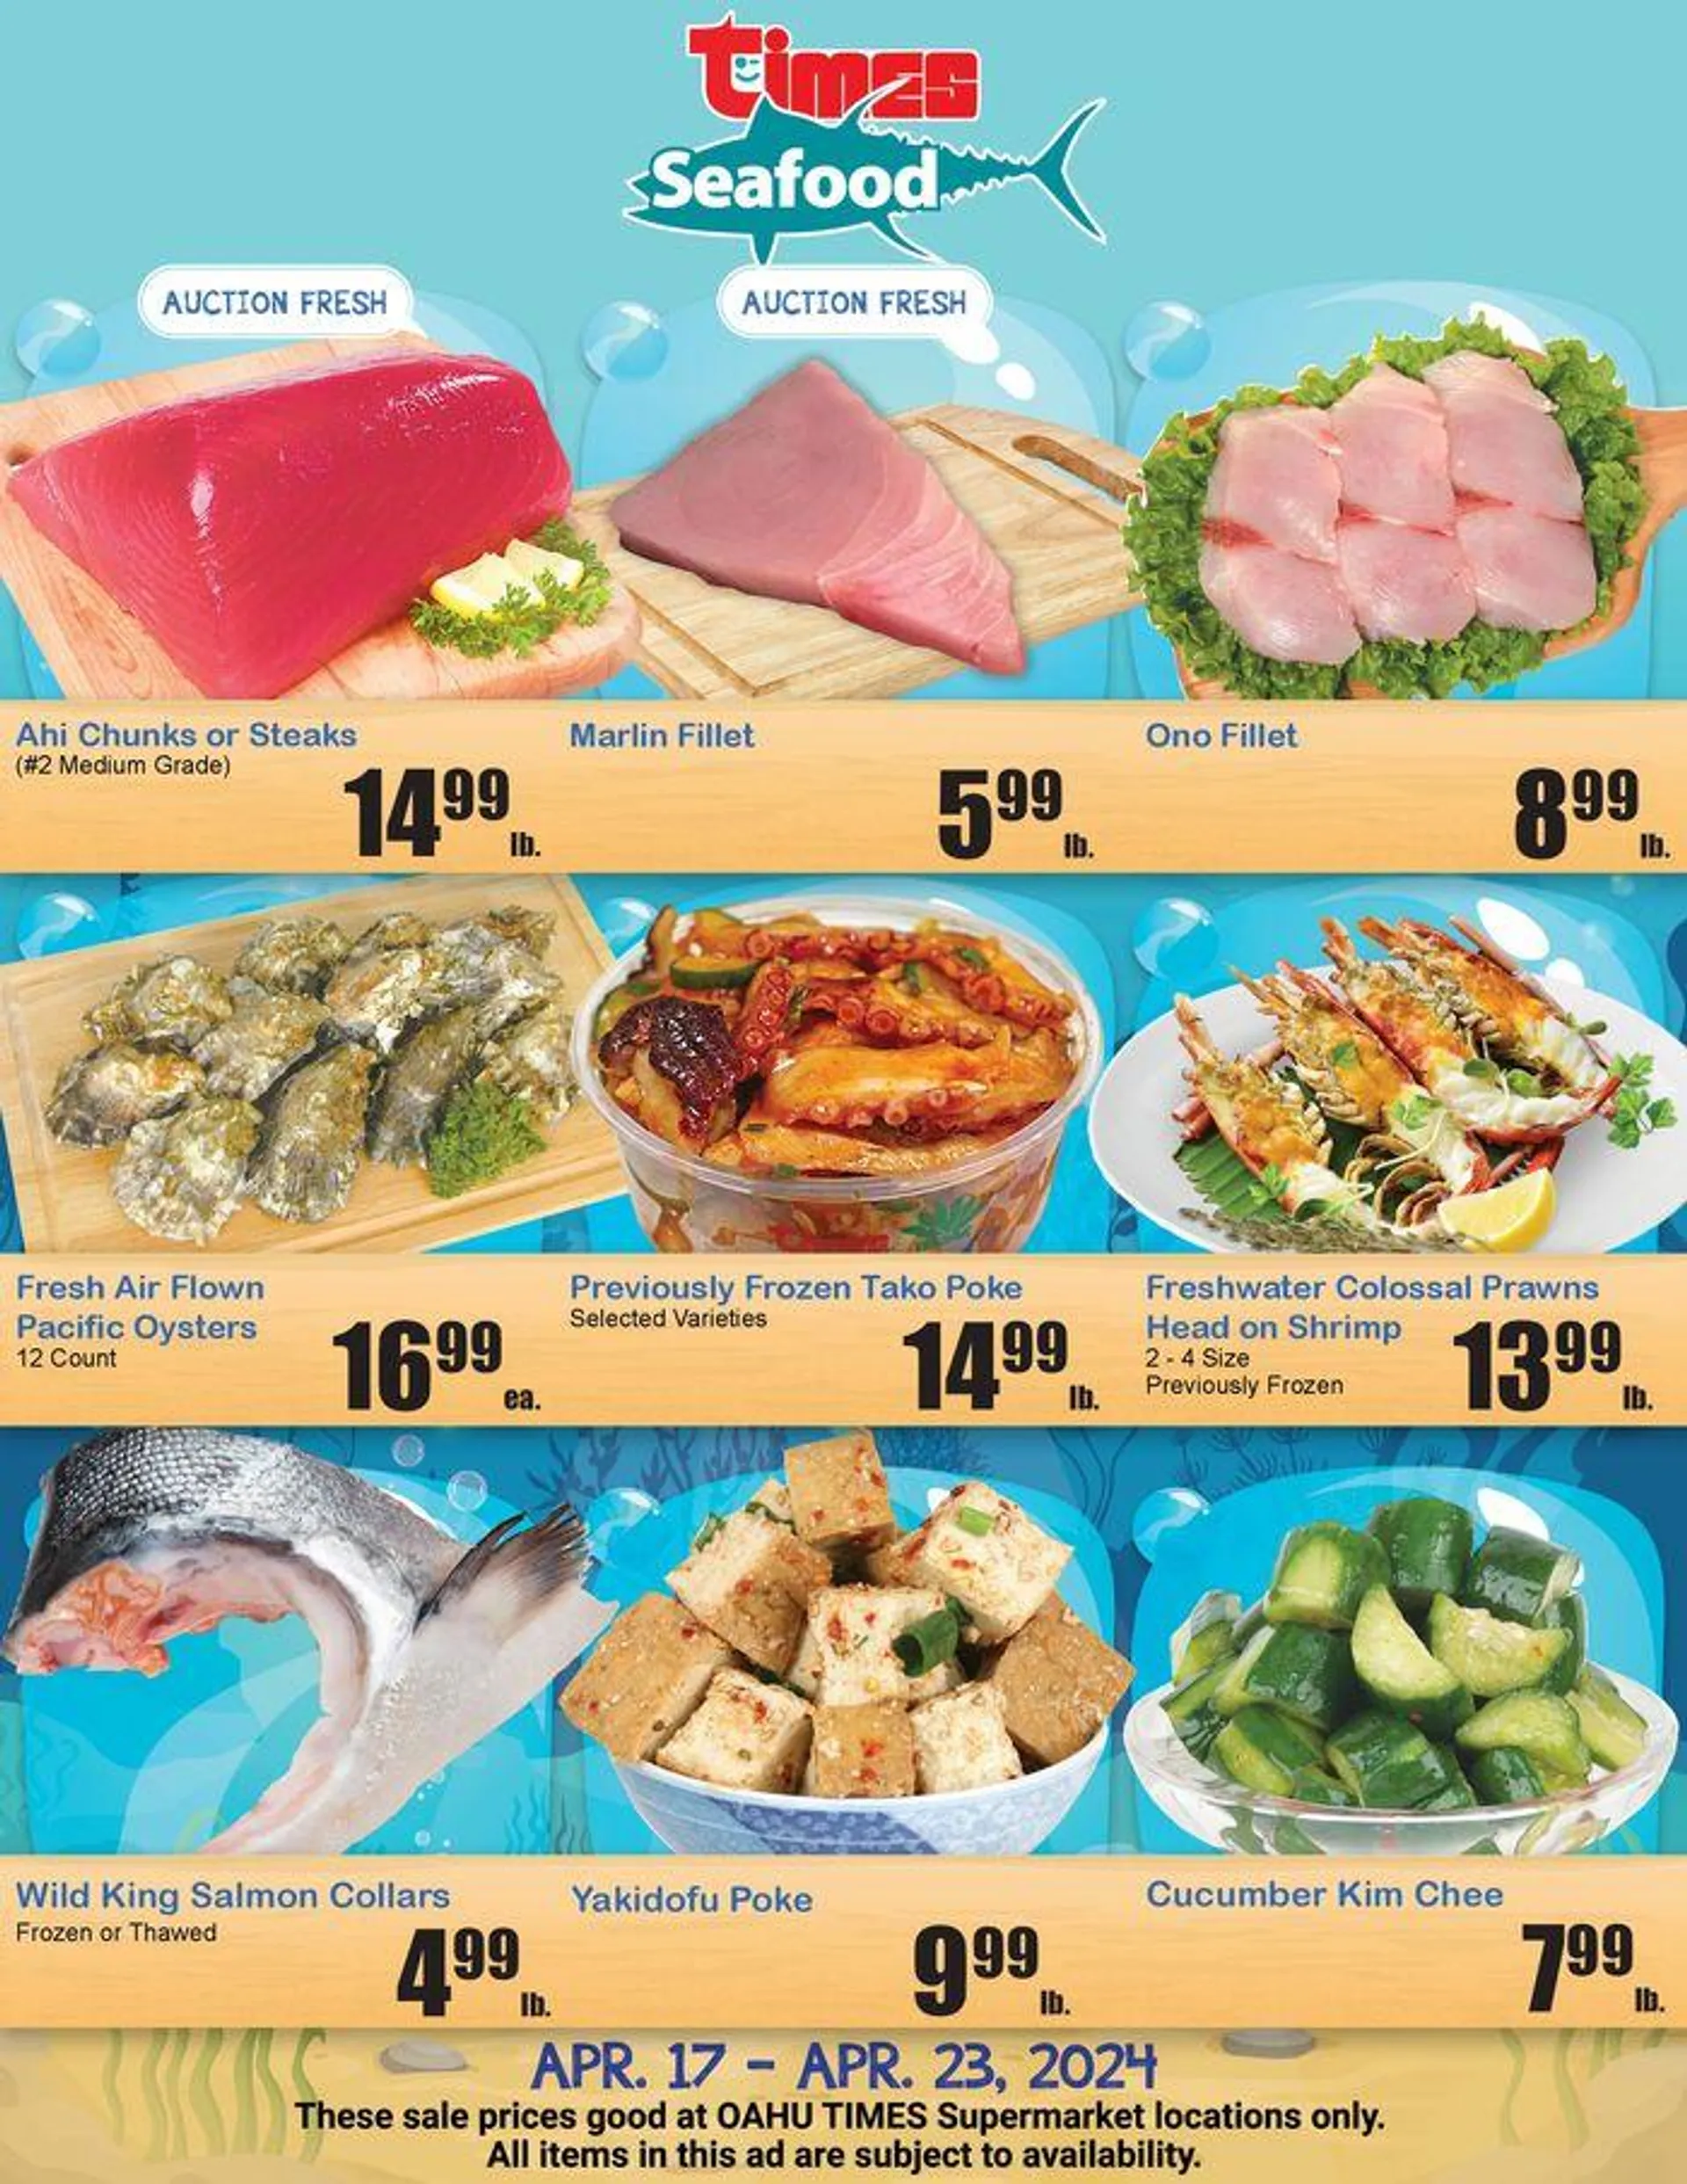 Seafood Specials - 1